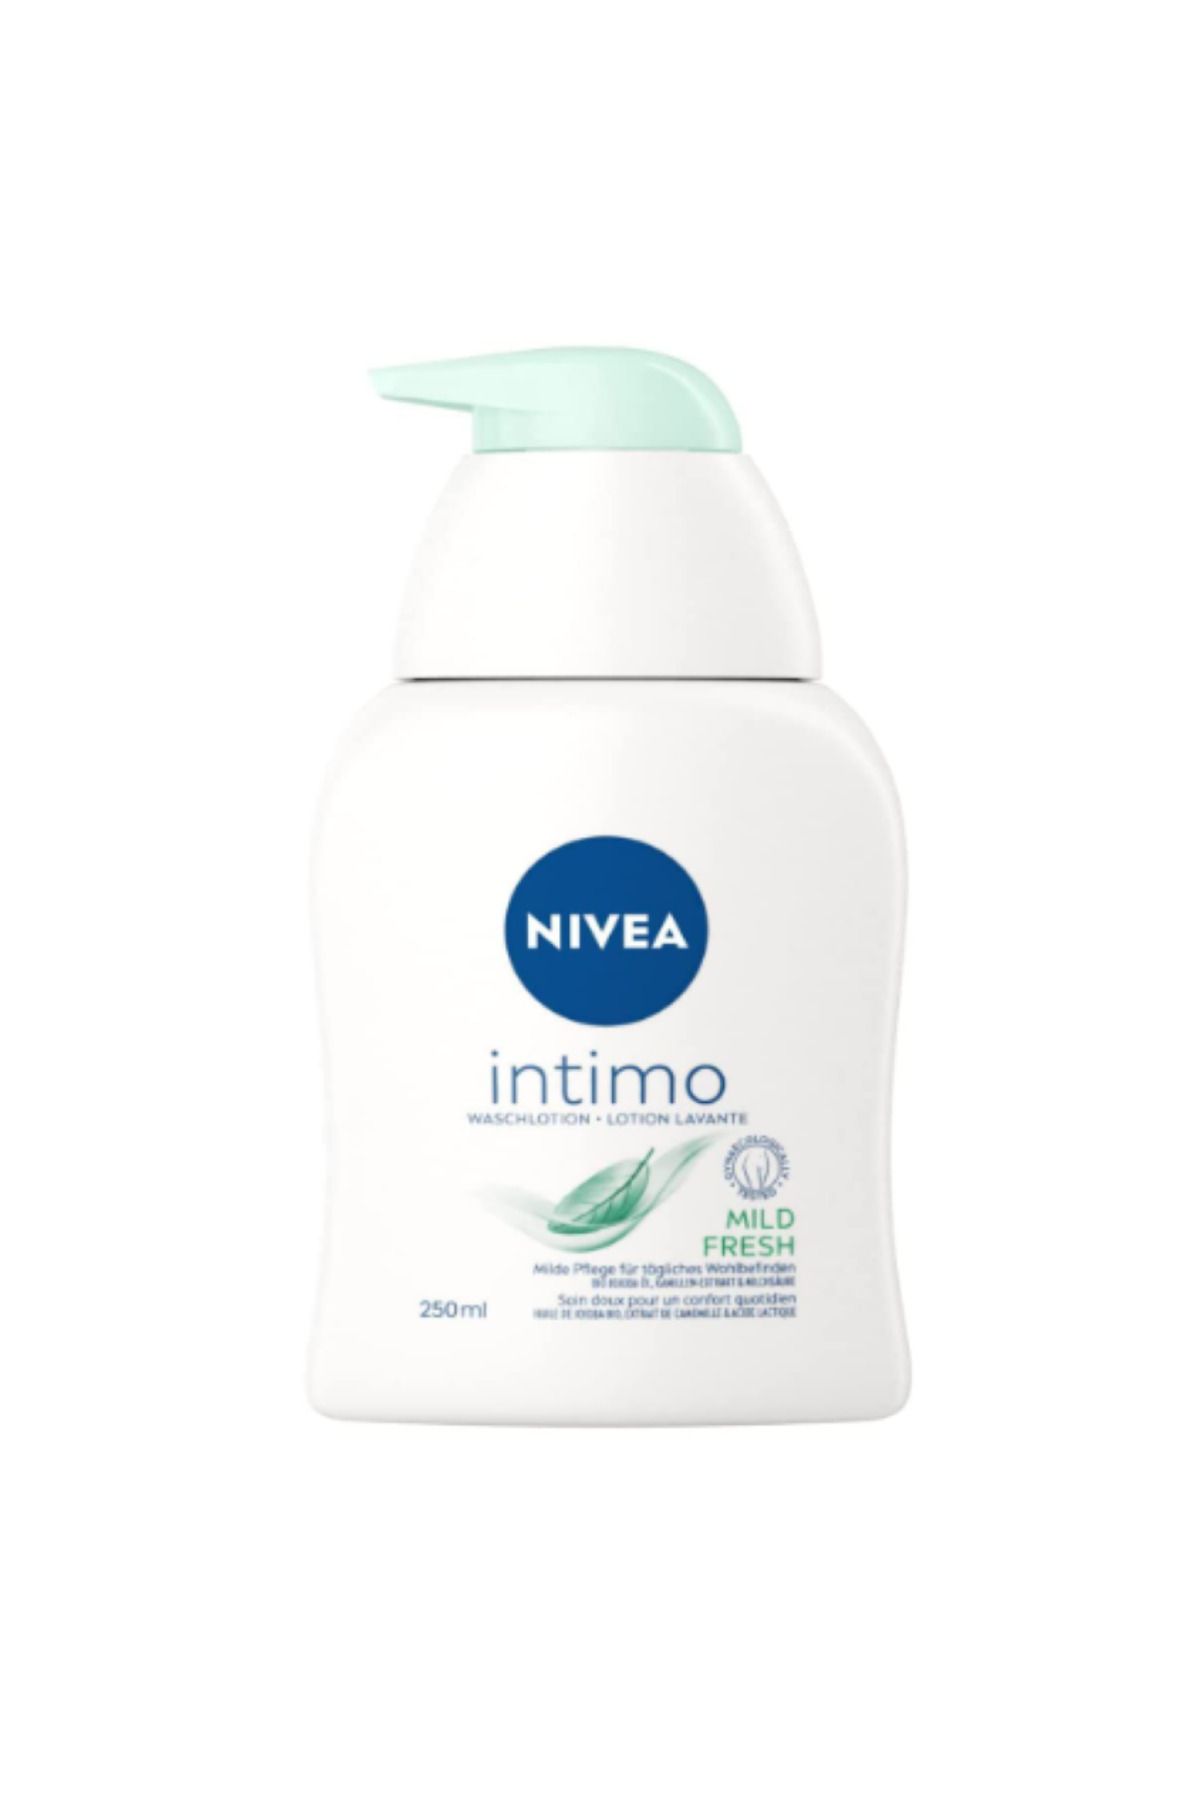 NIVEA Intimo yıkama losyonu Mild Fresh (250 ml)